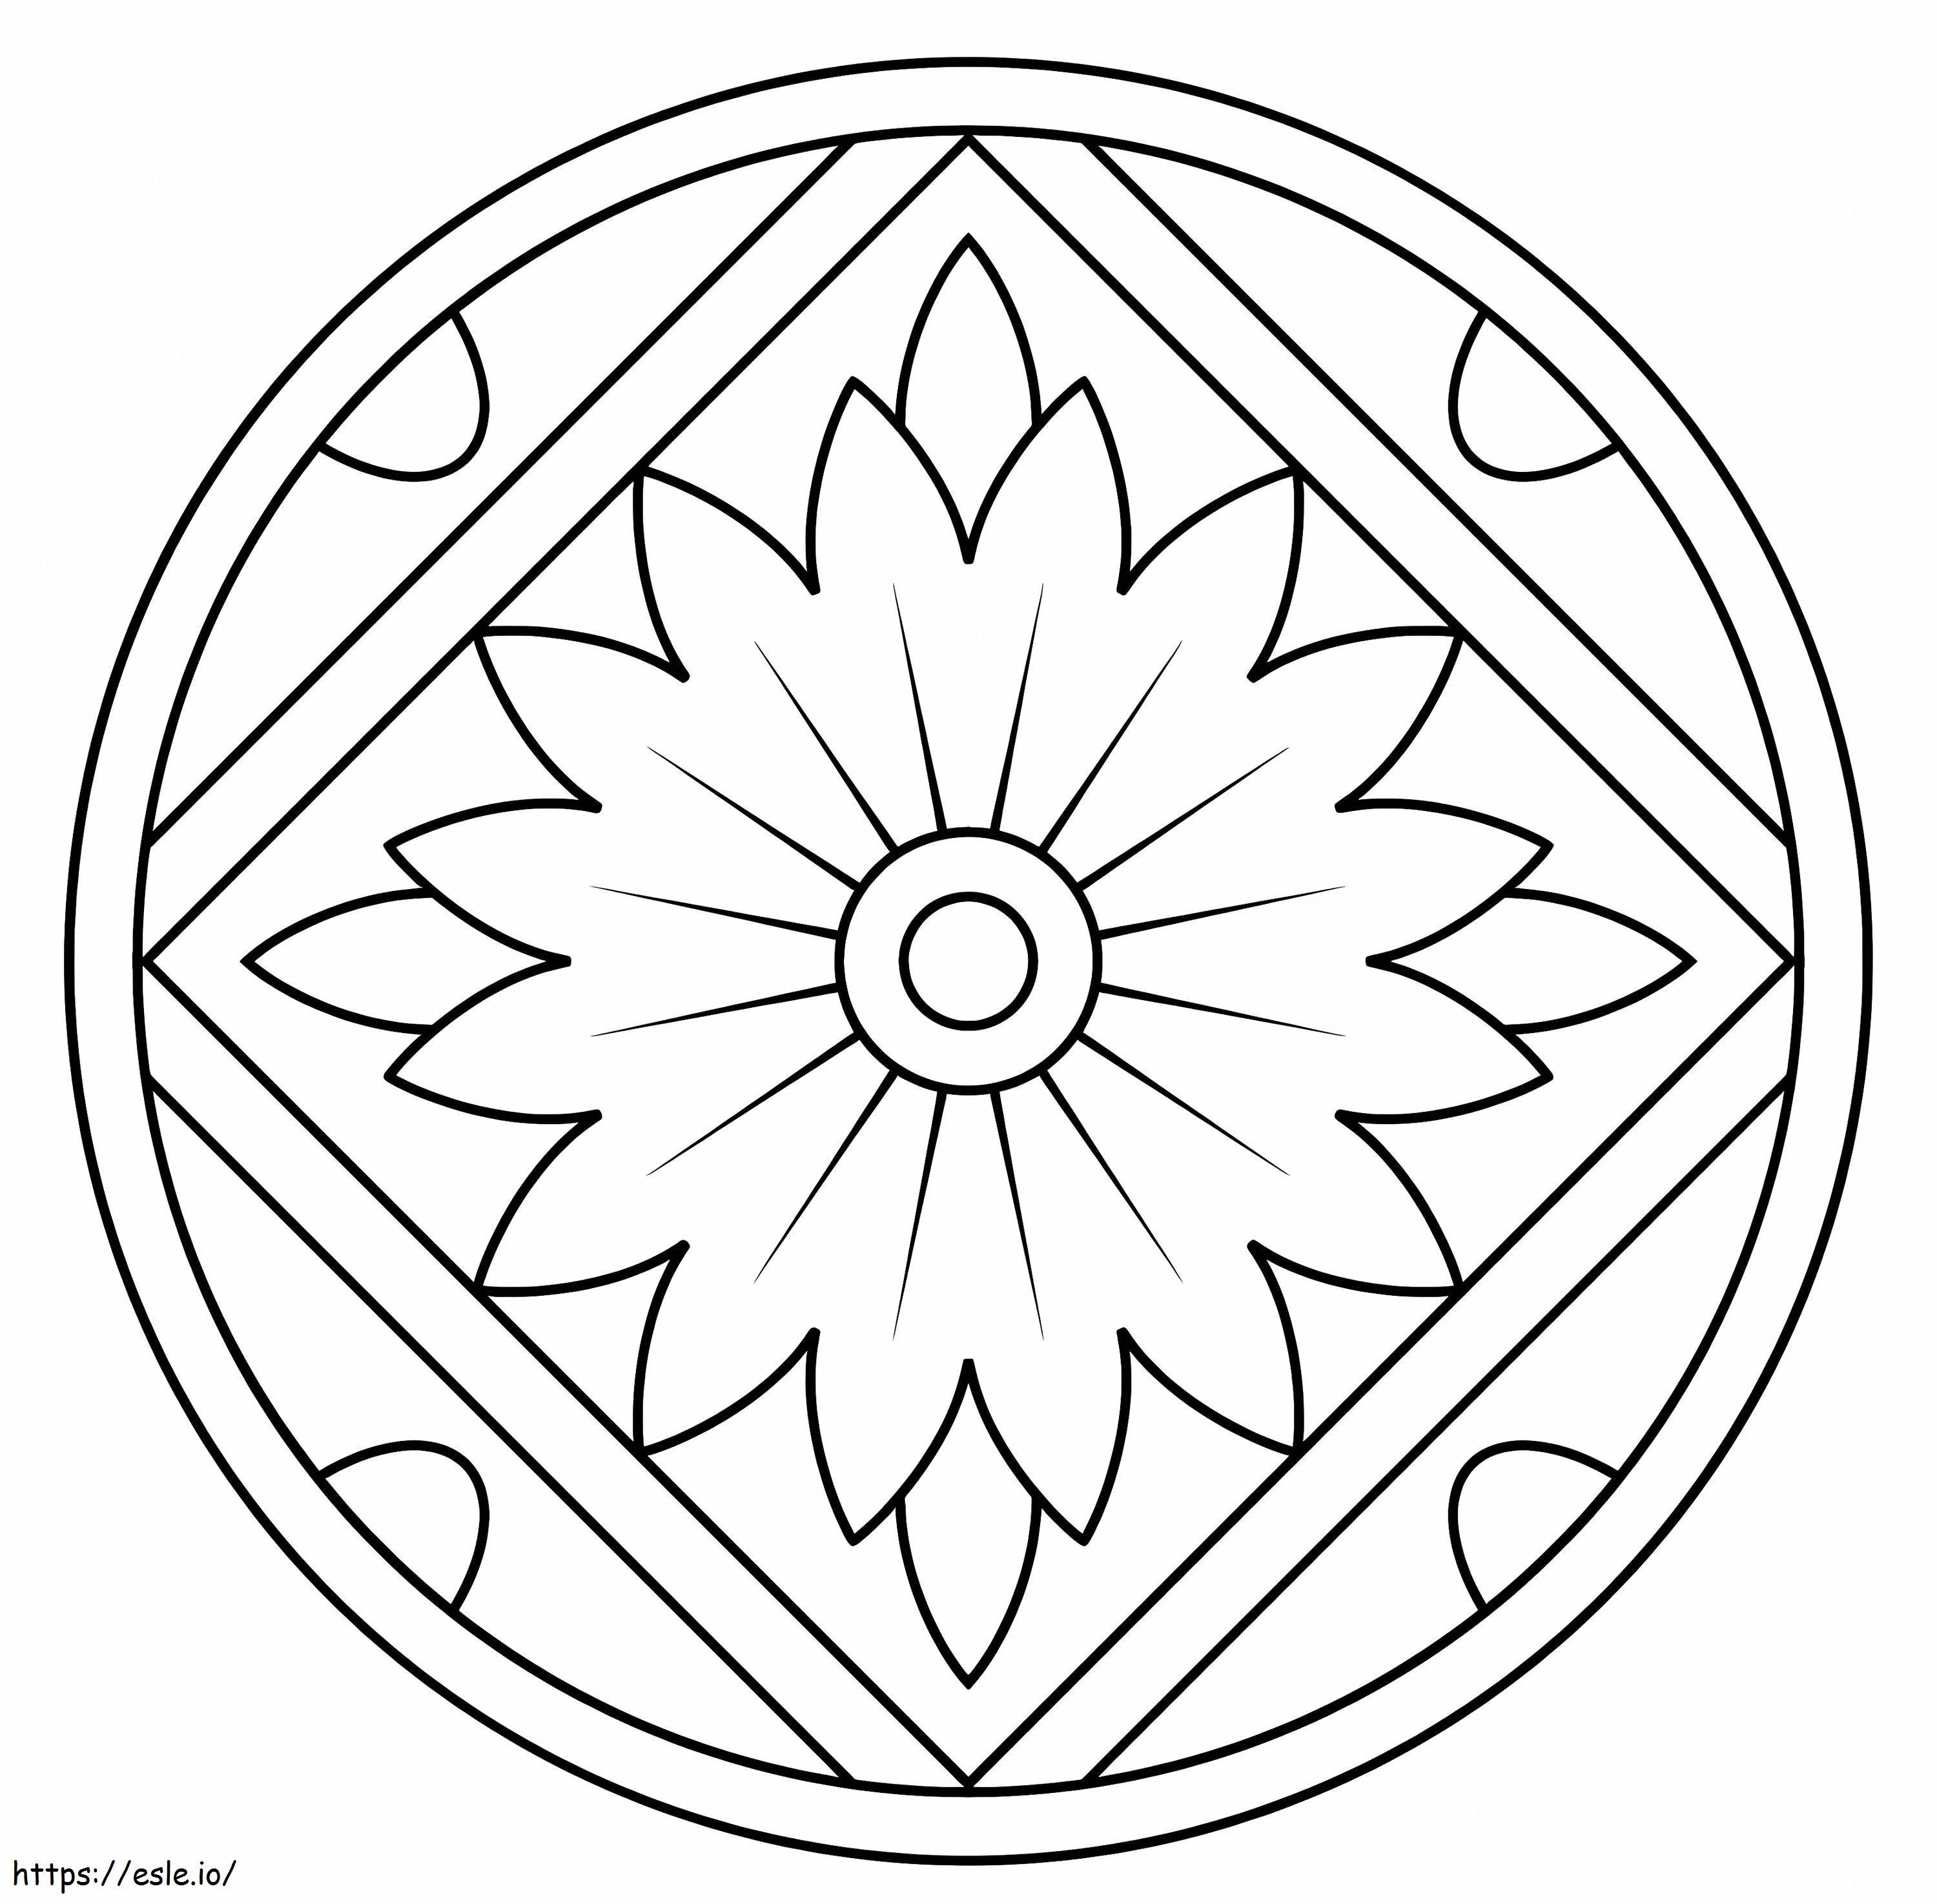 Mandala de Flores para Imprimir Gratis para colorear